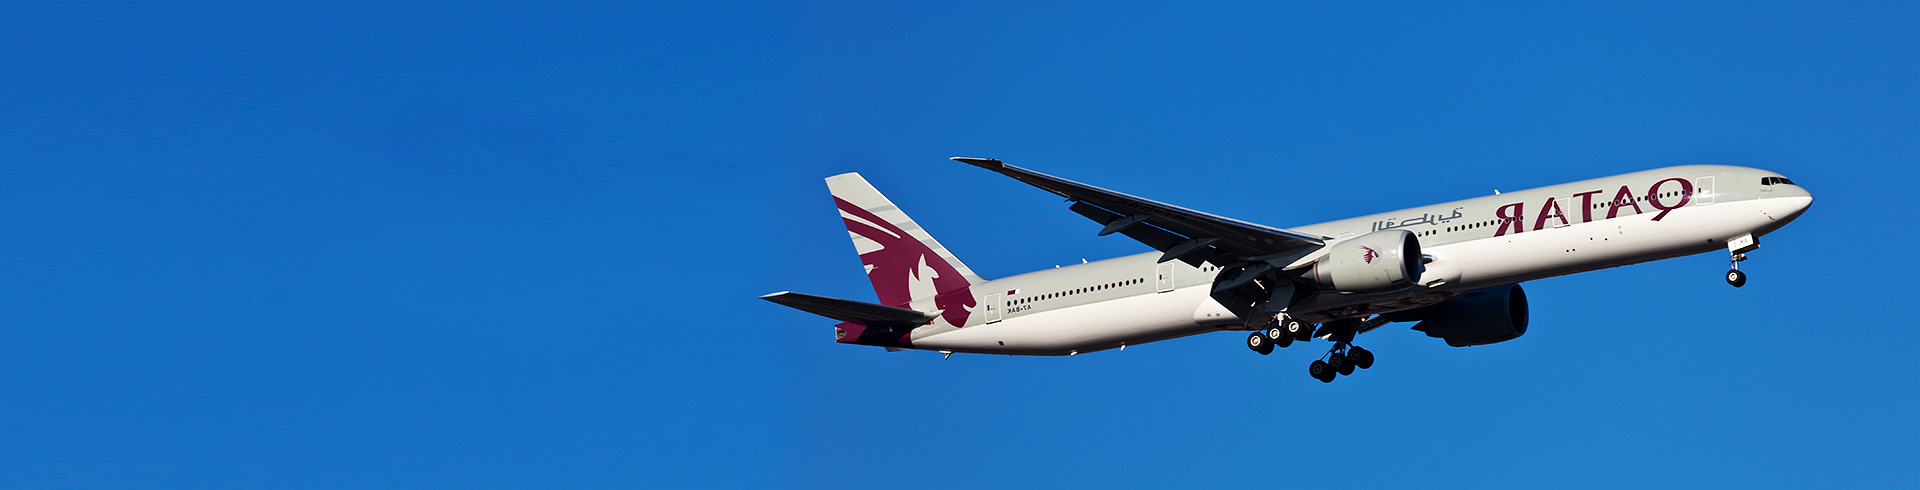 business class discount airline qatar airways - IFlyFirstClass